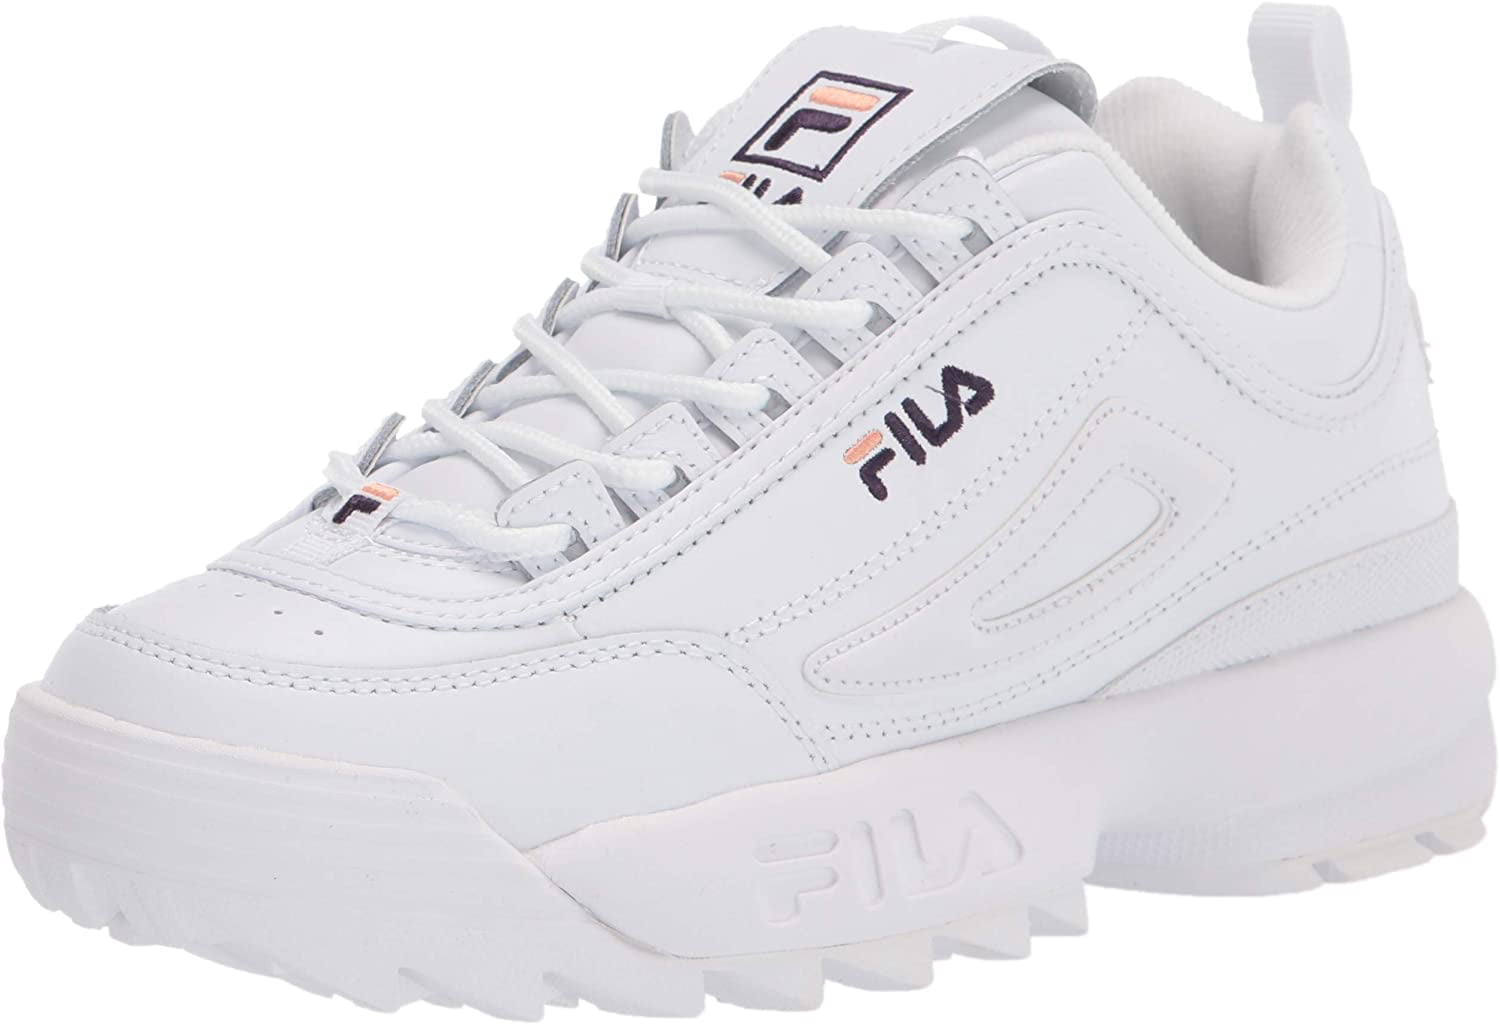 FILA DISRUPTOR II PREMIUM Sneakers White / Cado / Ggrp - Walmart.com